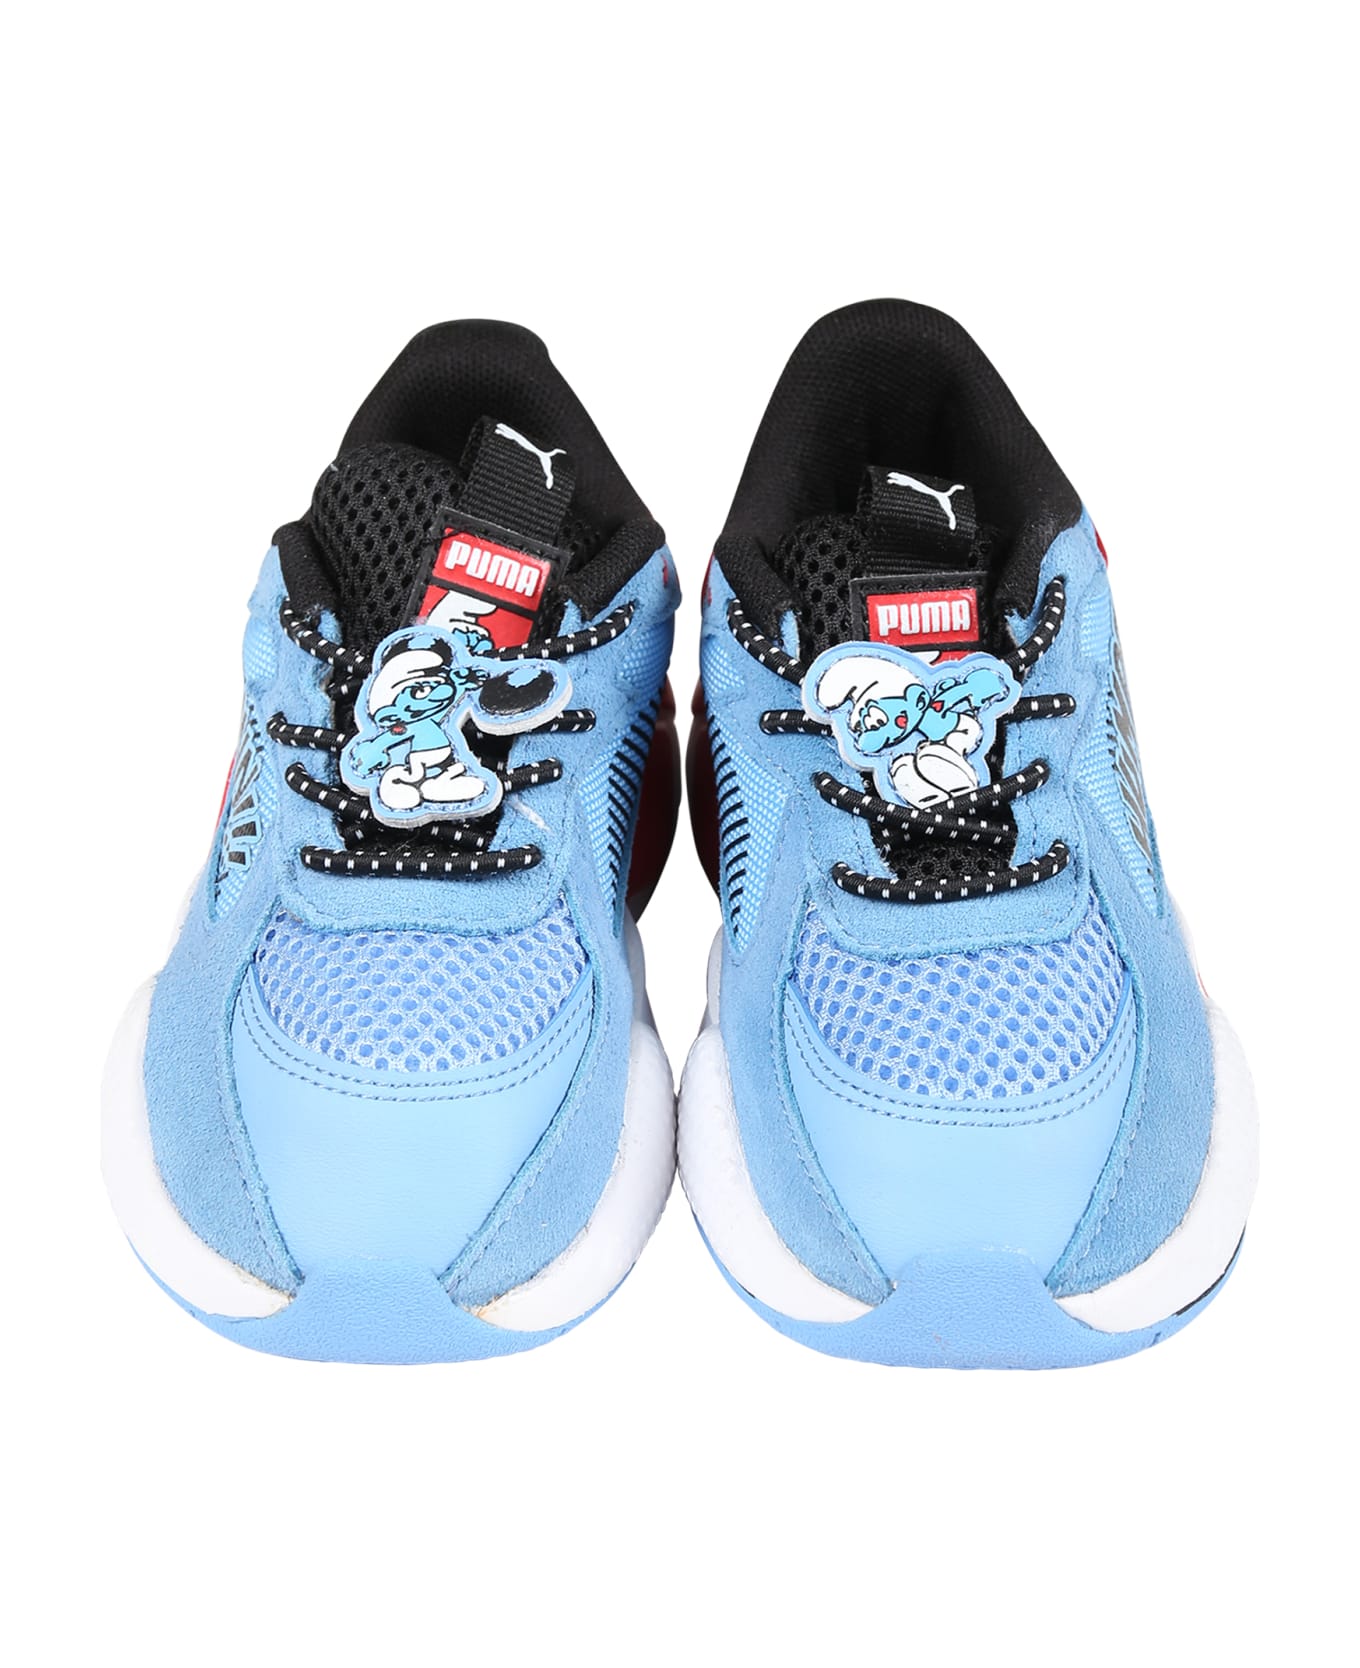 Puma Light Blue Rs-x The Smurfs Ps Sneakers For Boy - Light Blue